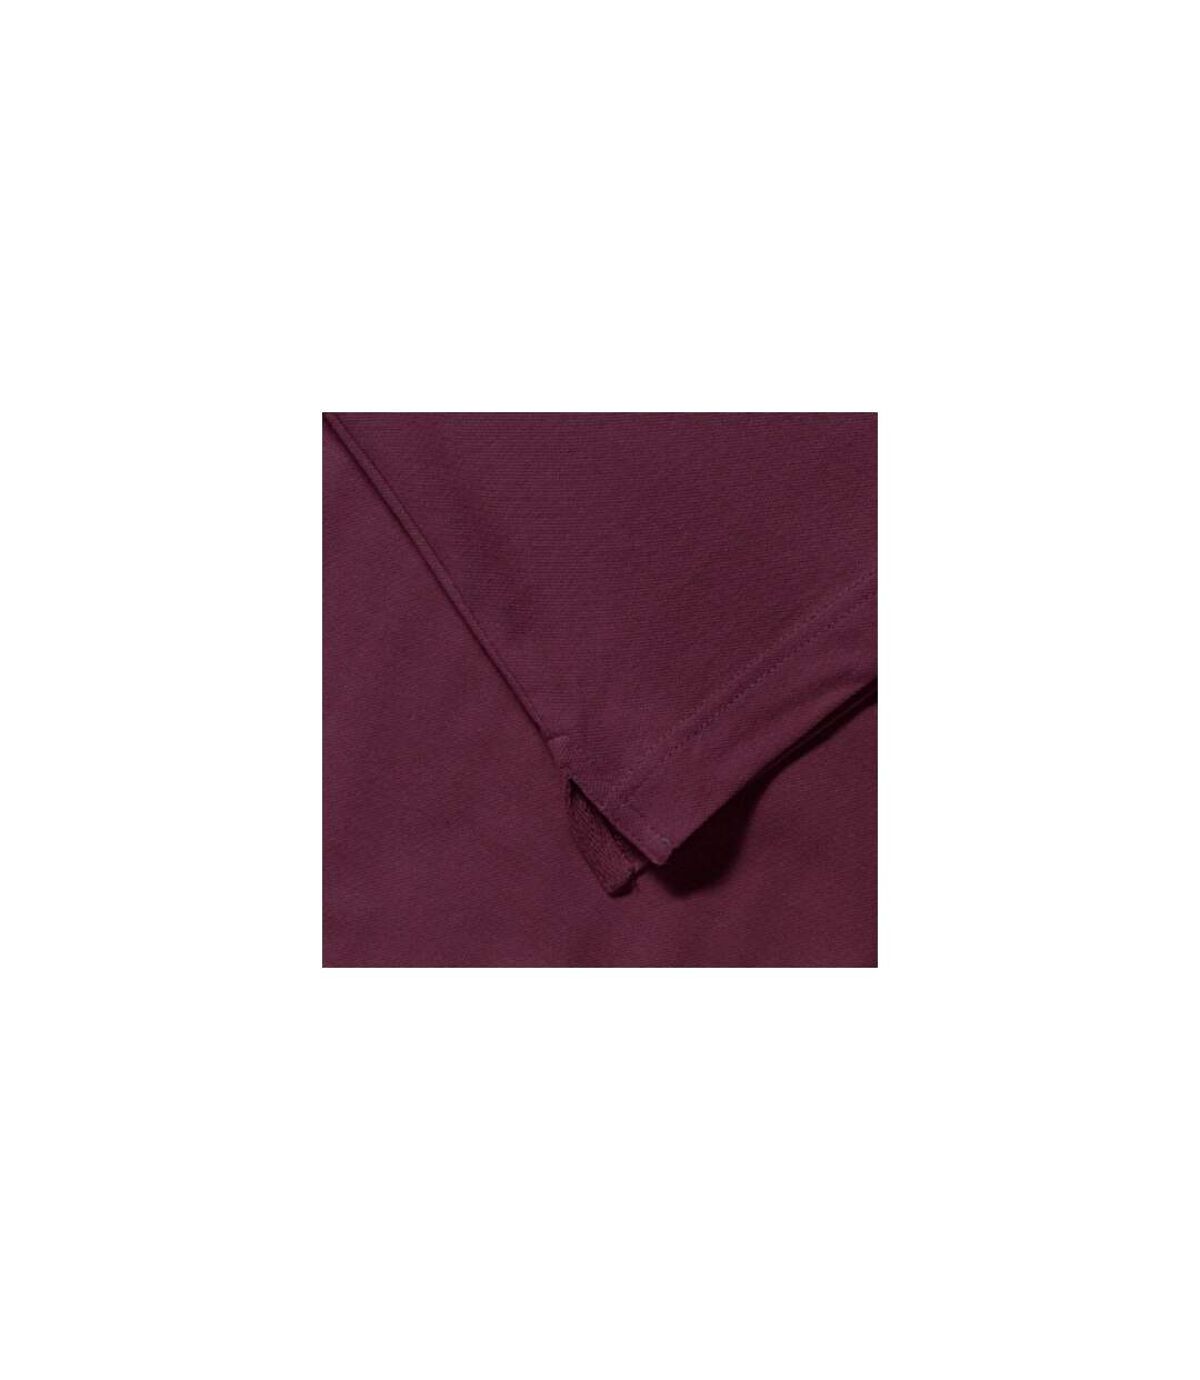 Russell Mens Stretch Short Sleeve Polo Shirt (Burgundy) - UTBC3257